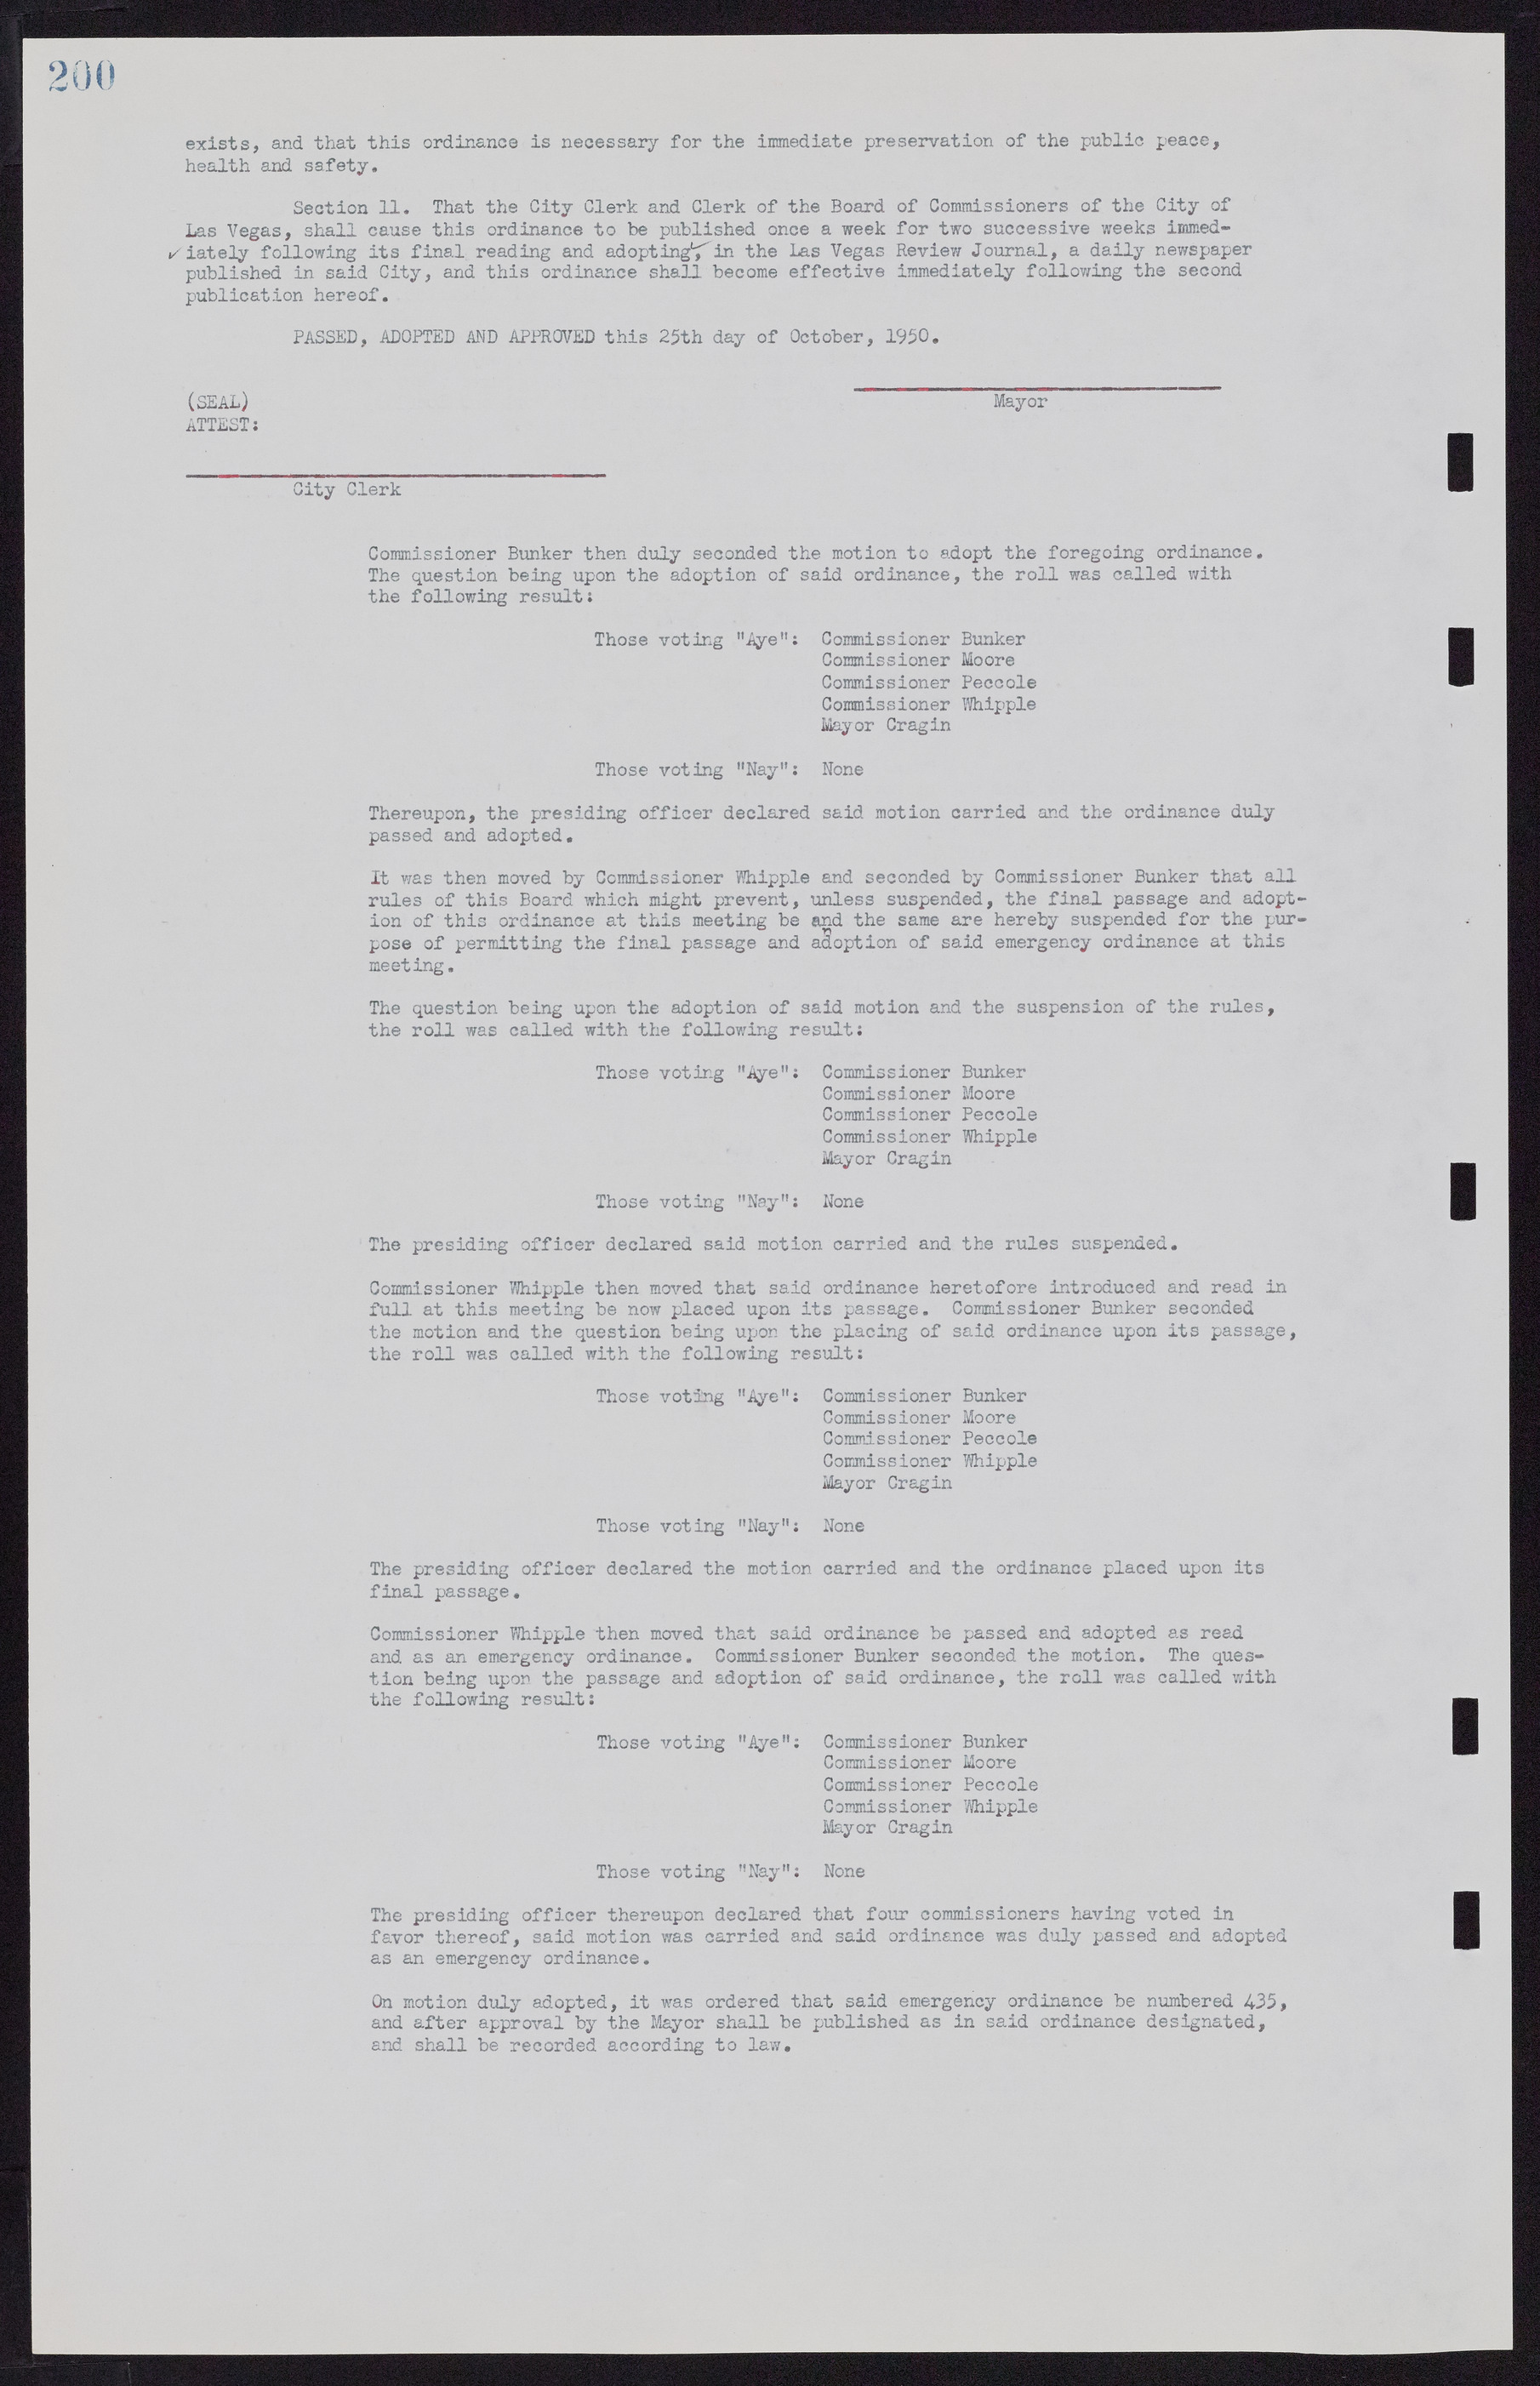 Las Vegas City Commission Minutes, November 7, 1949 to May 21, 1952, lvc000007-210